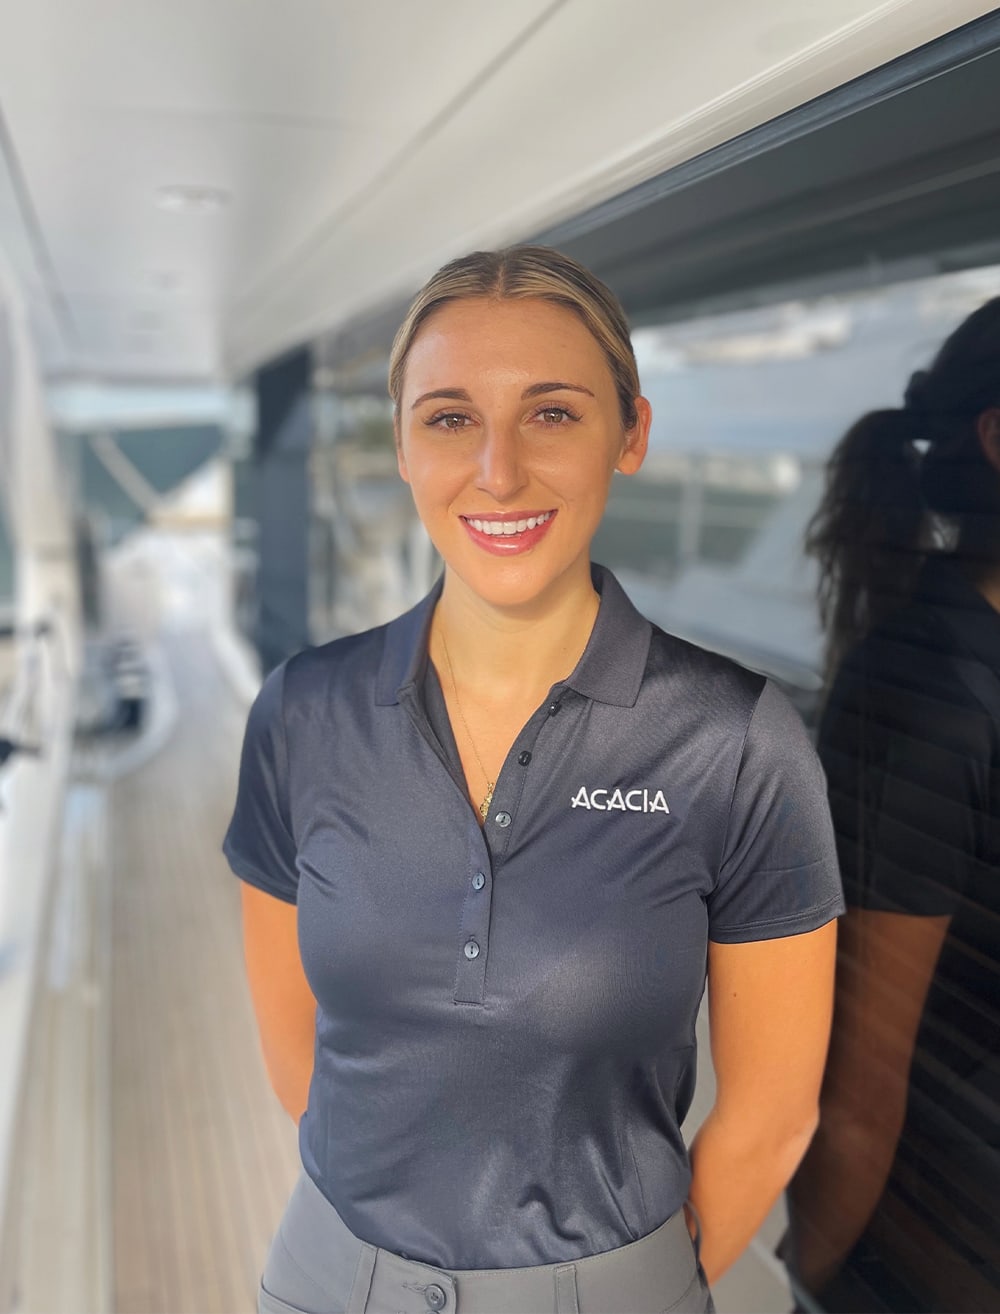 Charter superyacht Acacia Chief Stewardess Allison Sabo